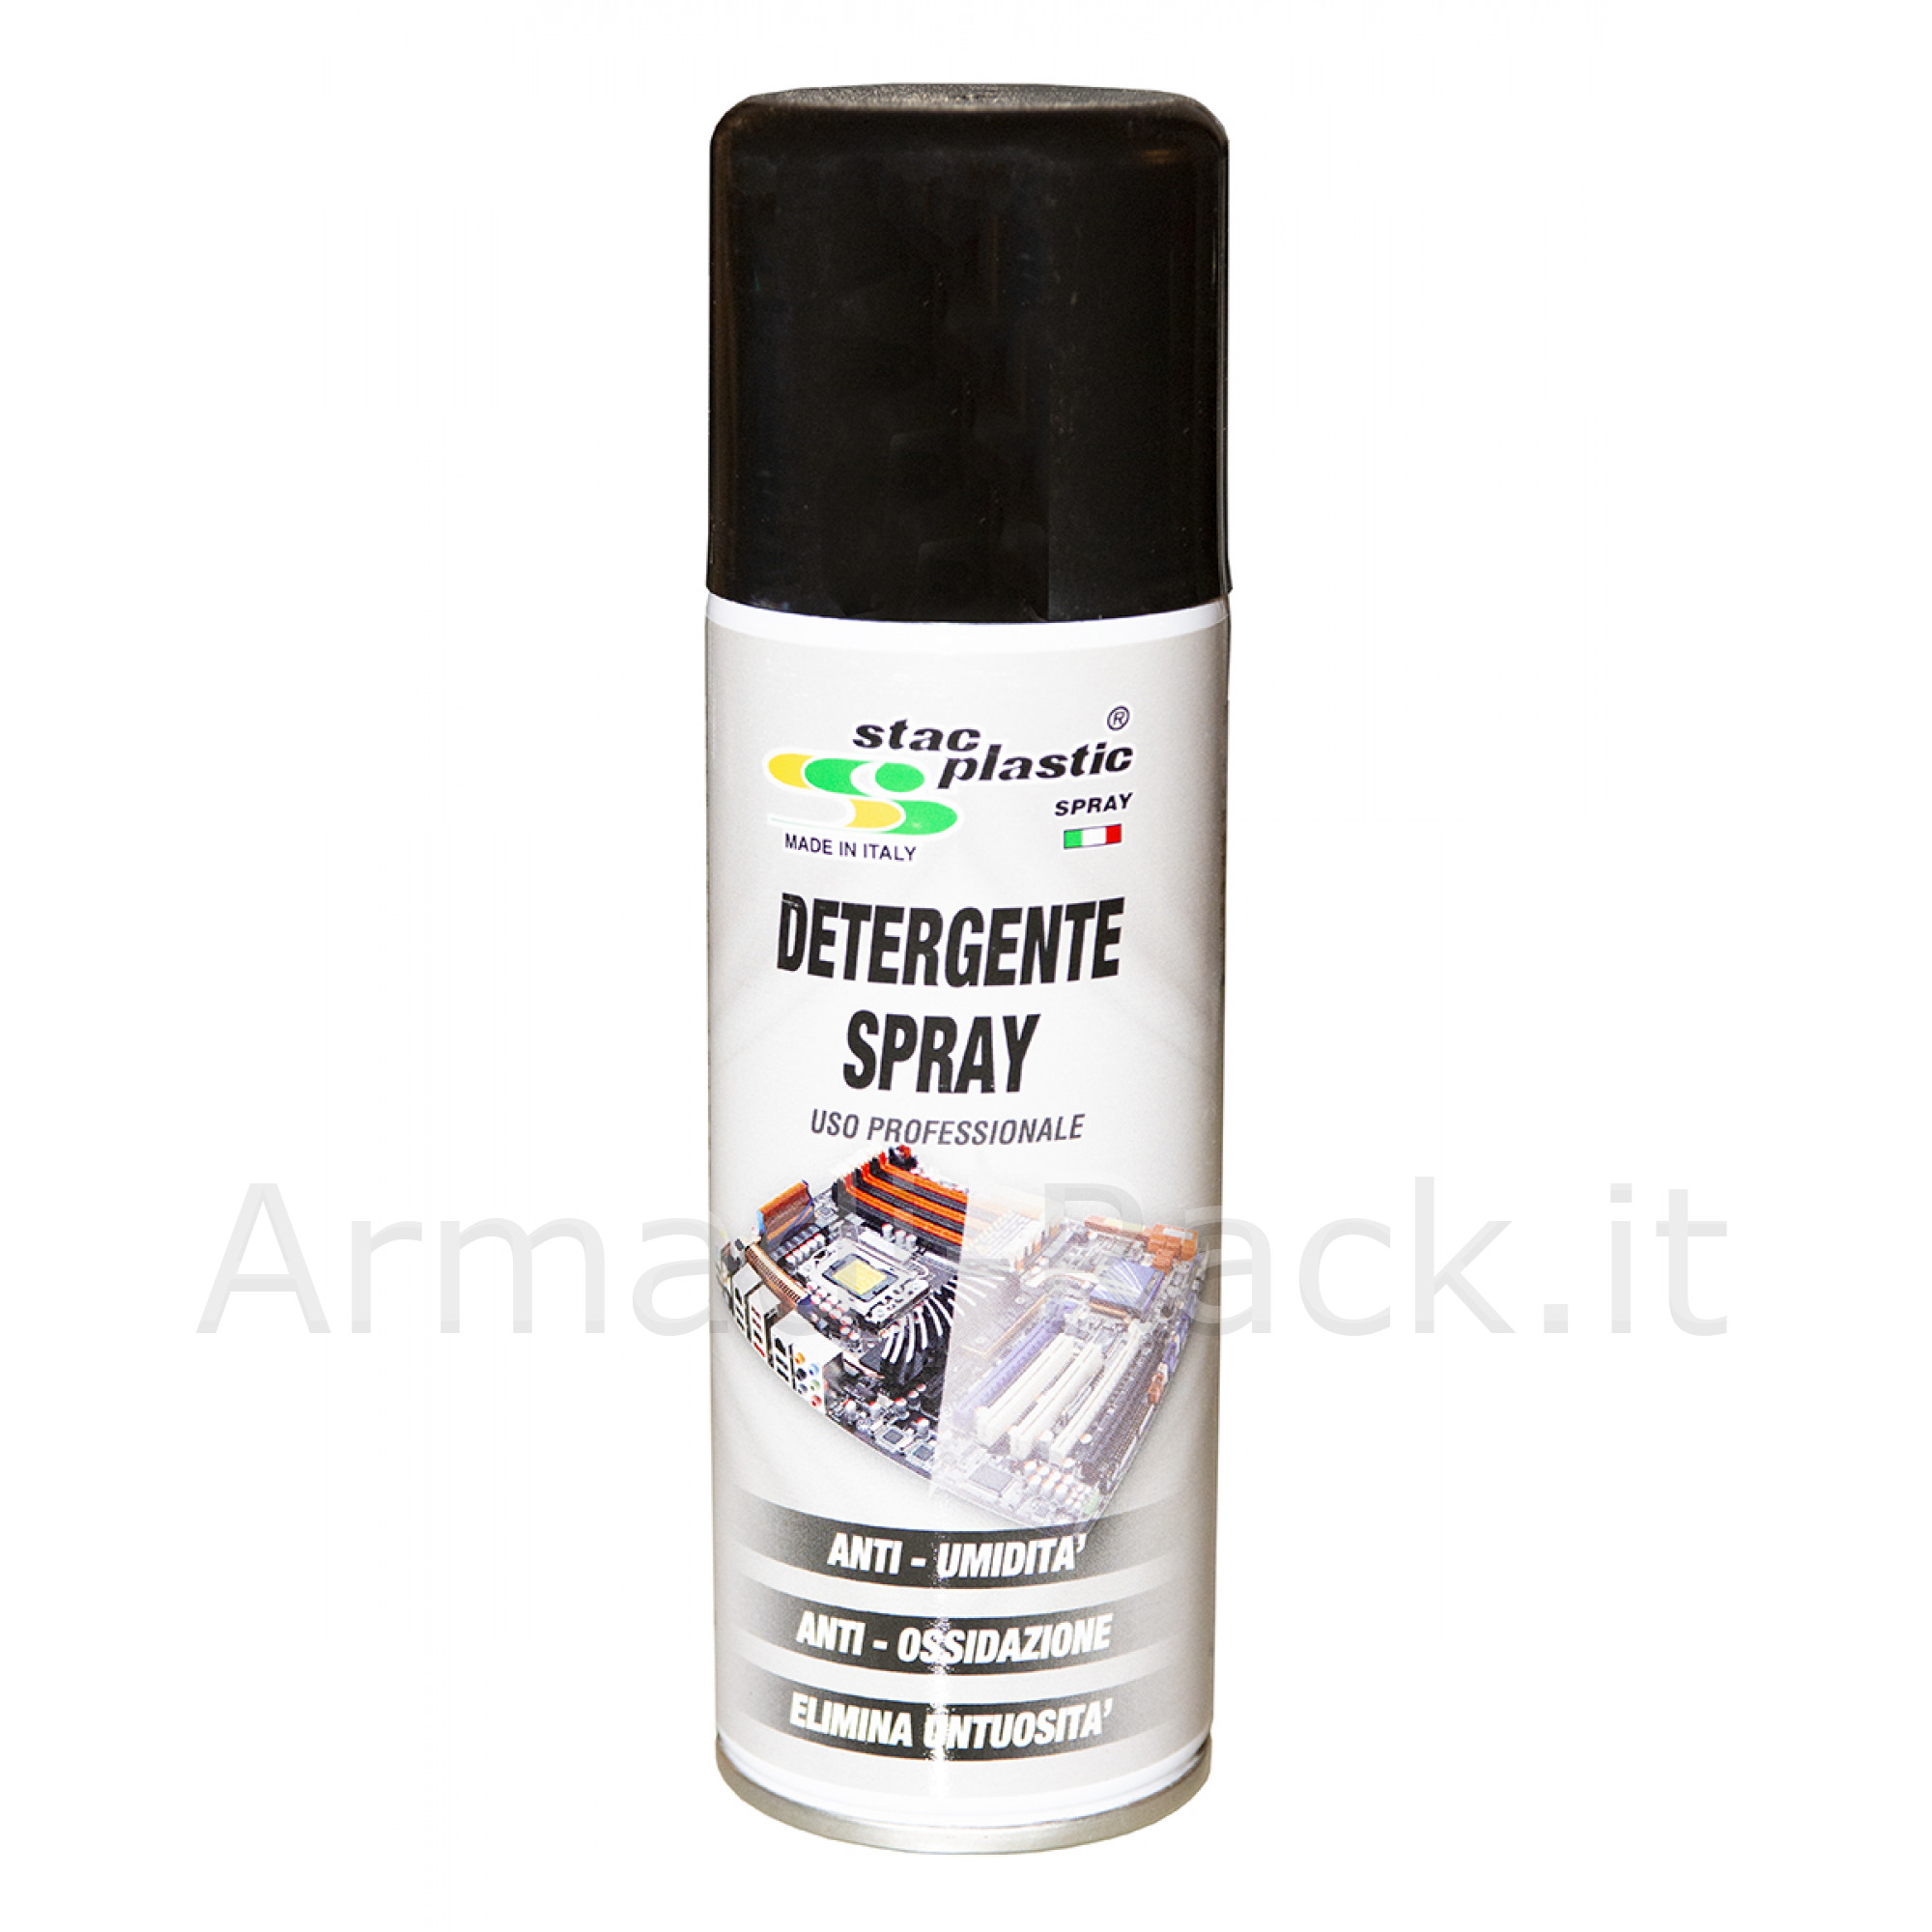 Spray detergente per contatti anti ossidazione, anti umidita', - Armadi Rack